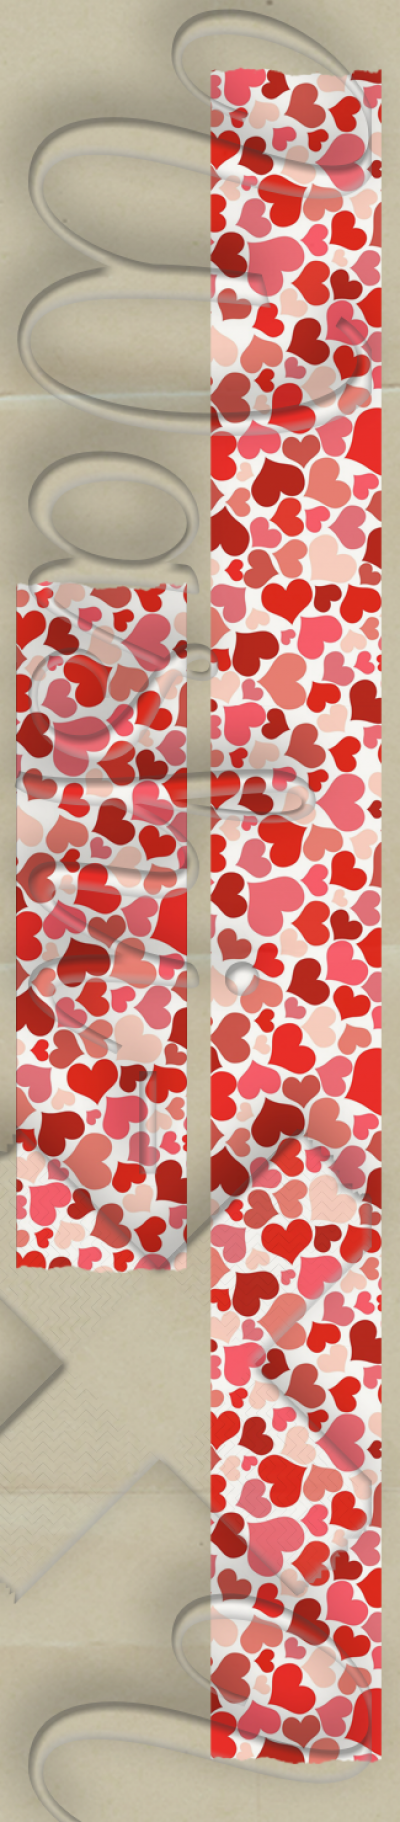 Washi-X Washi Tape Red hearts patterned washi tape